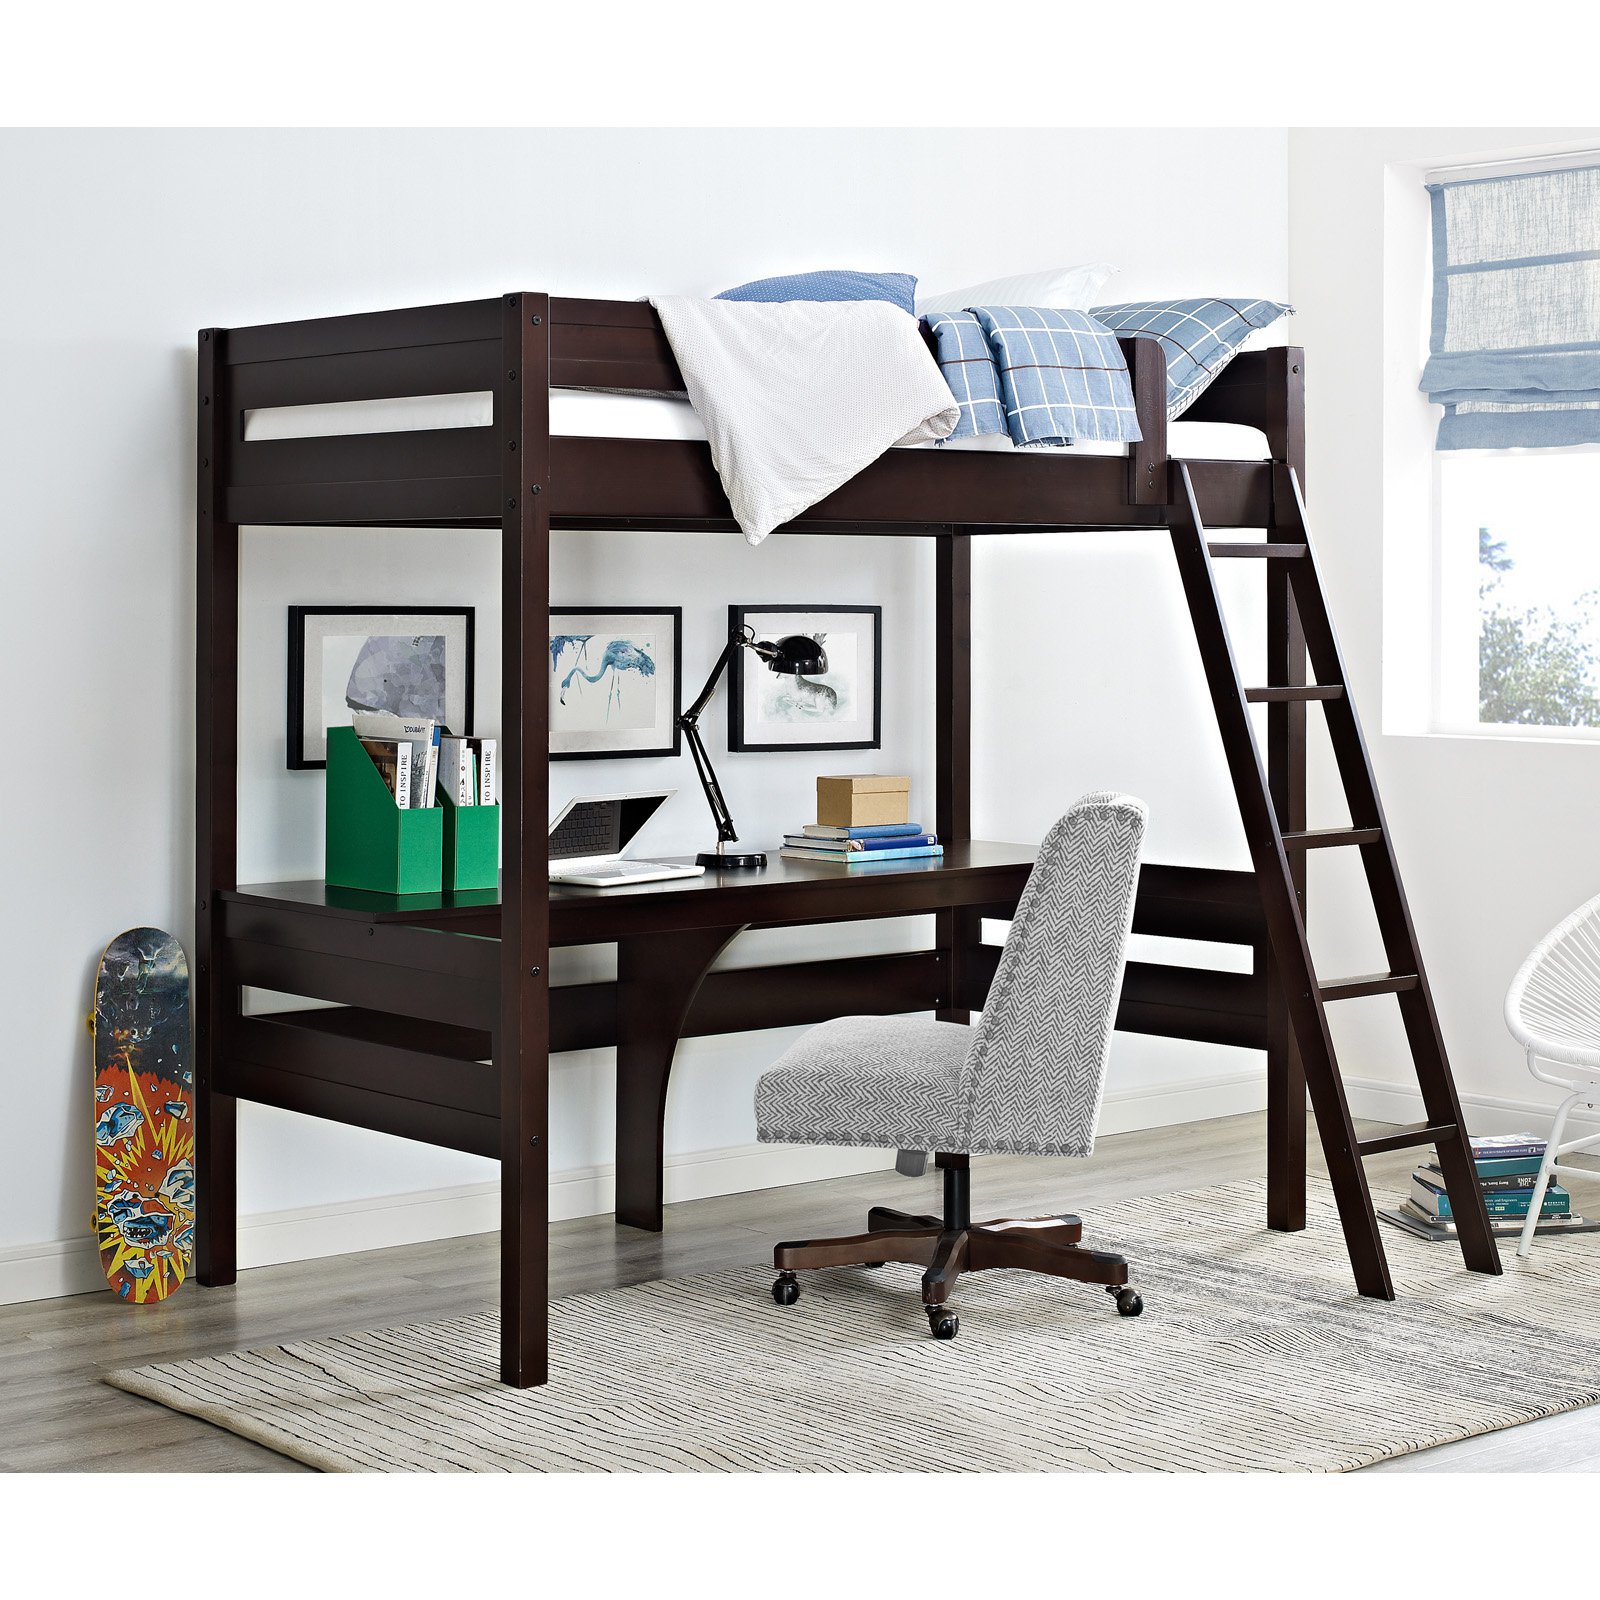 Dorel Living Harlan Twin Wood Loft Bed with Desk, Multiple Colors -  Traveller Location